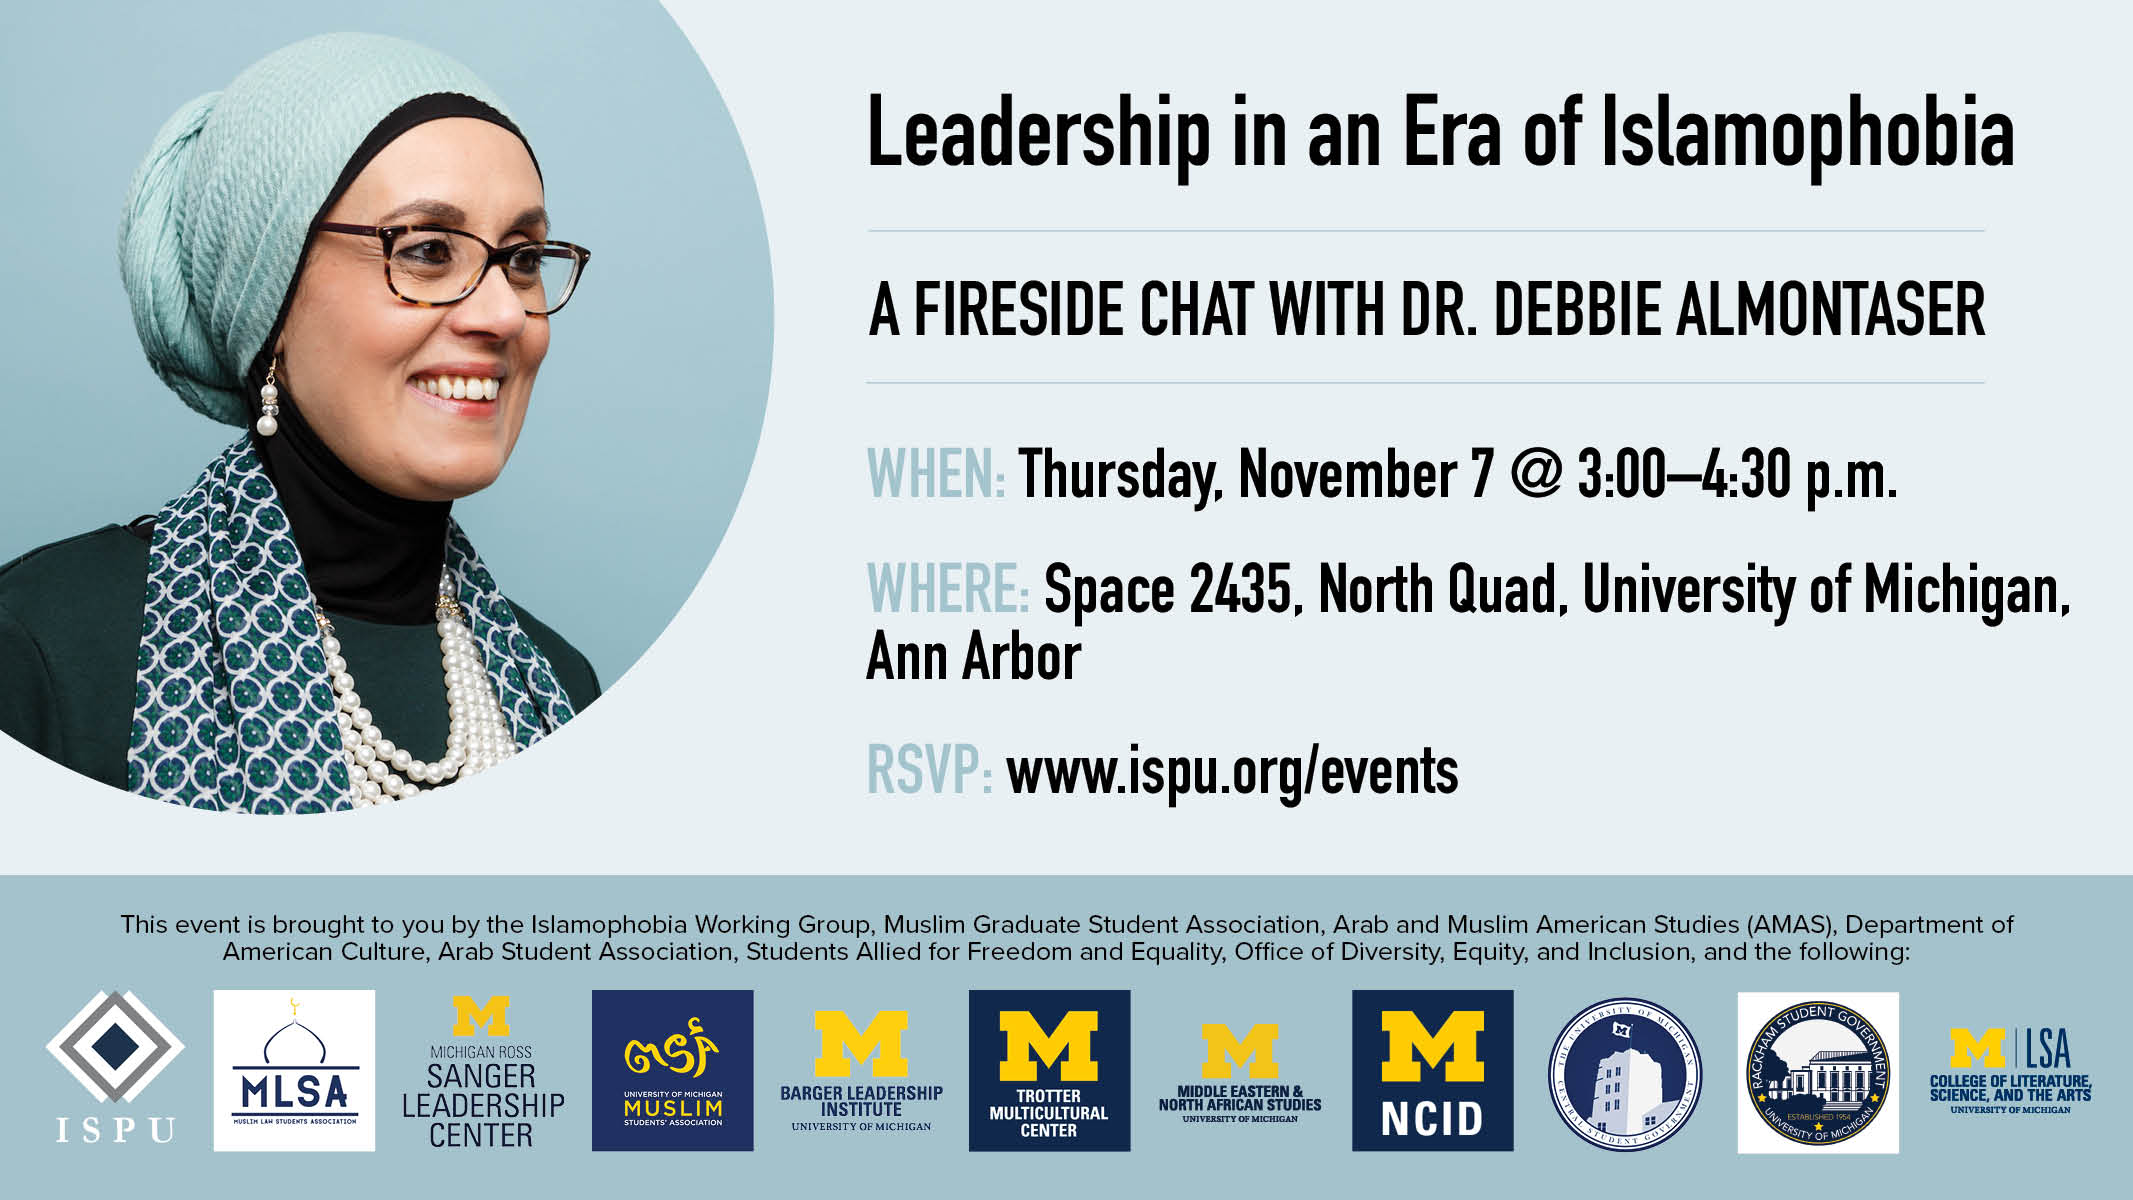 Leadership in an era of Islamophobia event flyer